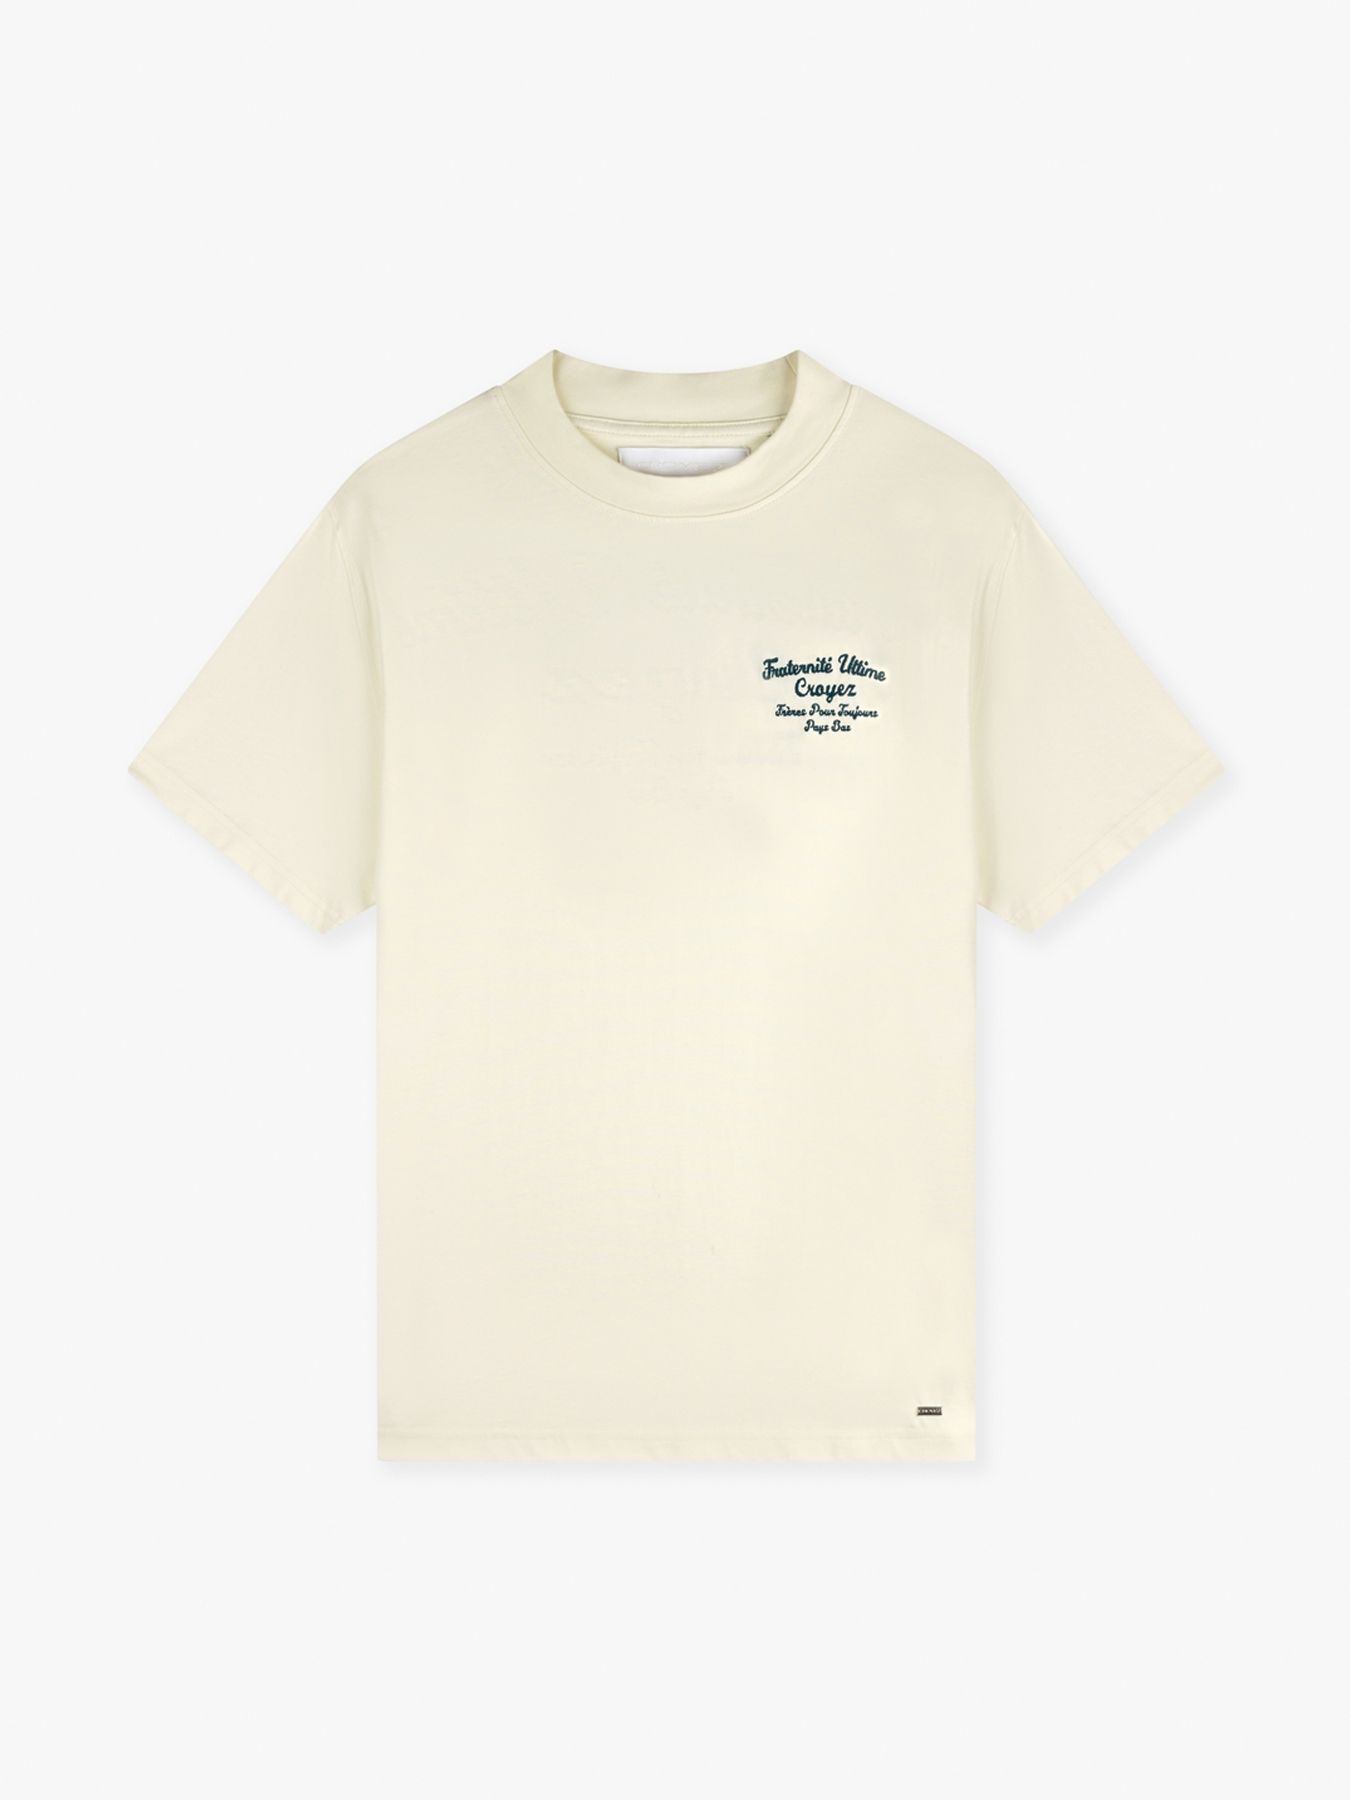 Croyez Fraternite T-shirt Buttercream/petrol 2900147001046